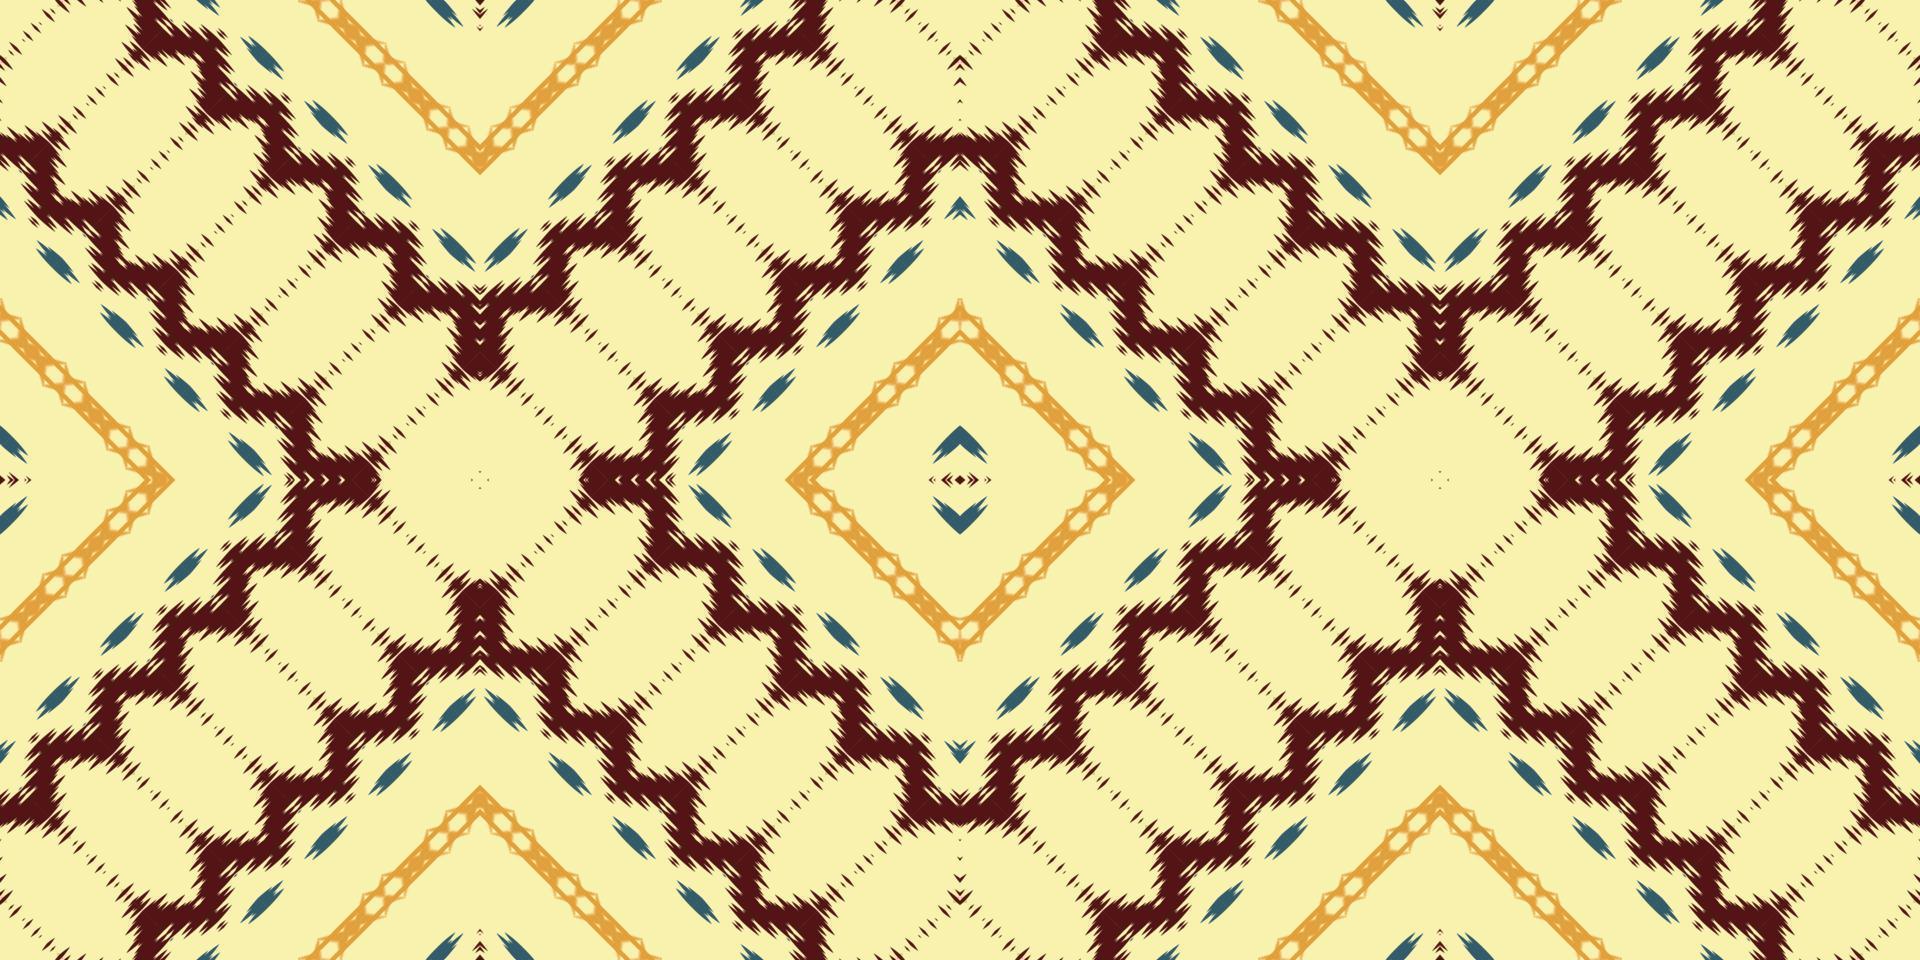 ikkat ou ikat floral batik têxtil padrão sem costura design de vetor digital para impressão saree kurti borneo tecido borda pincel símbolos amostras elegantes